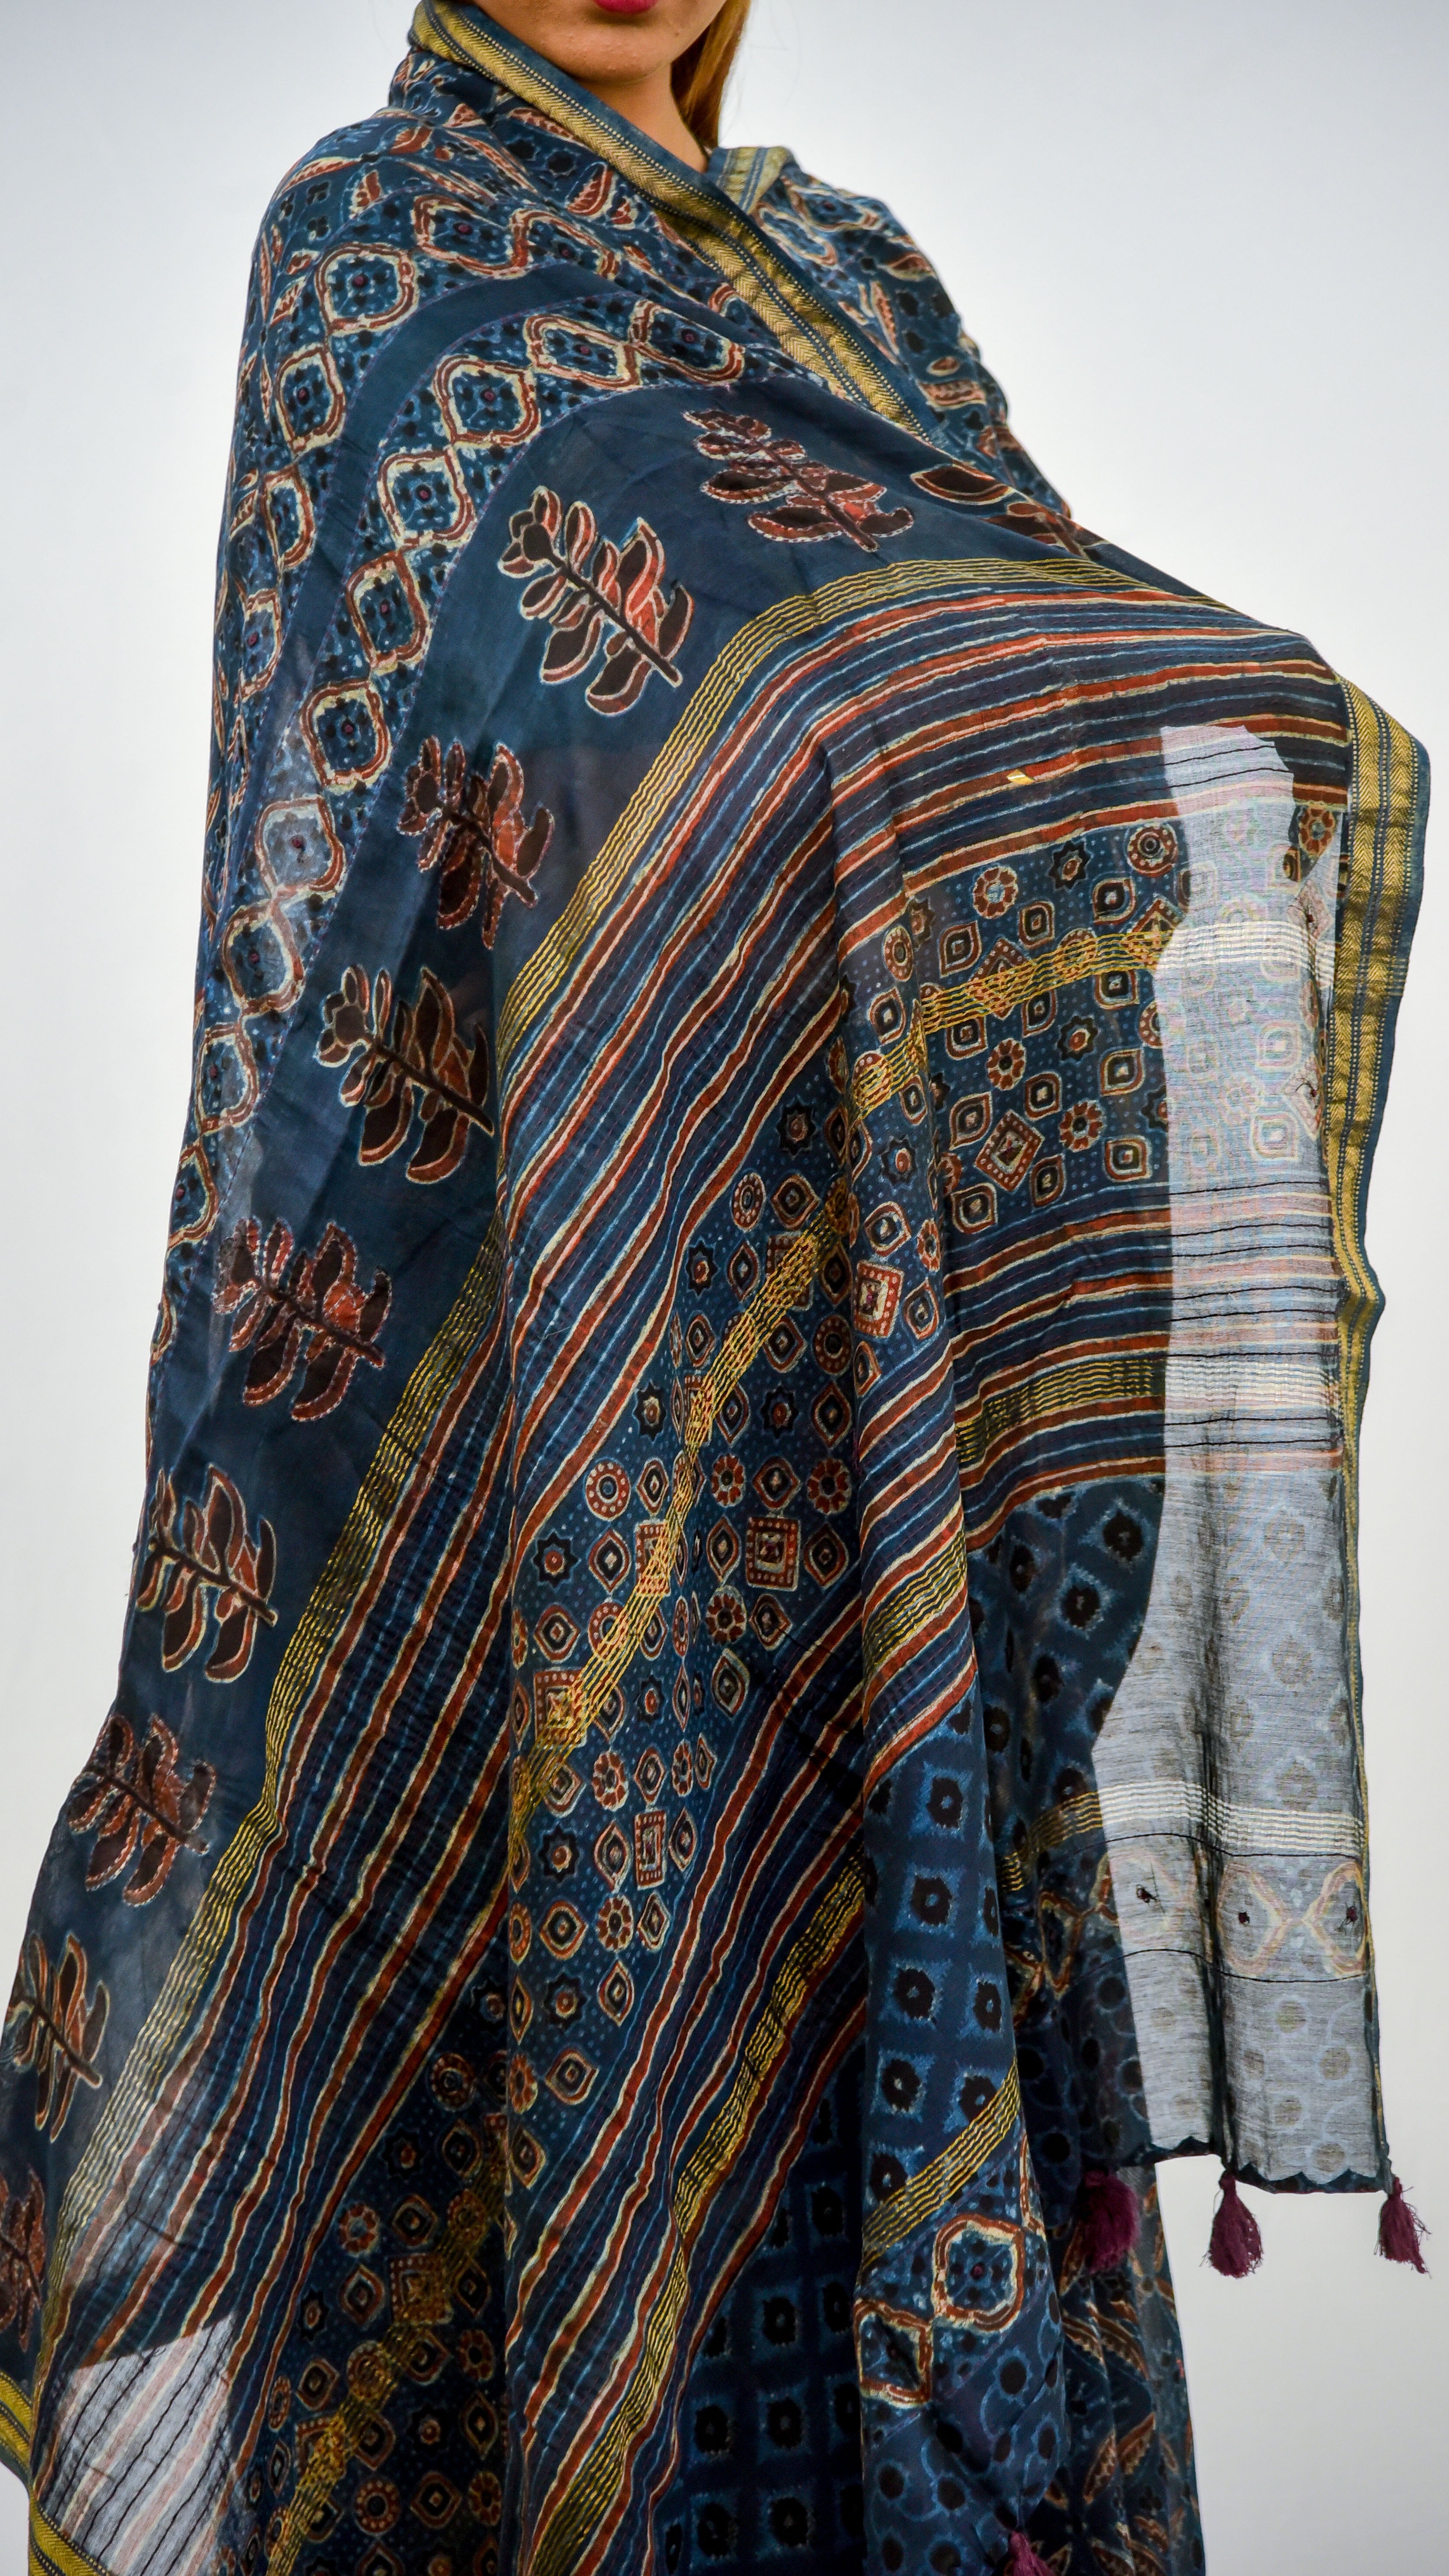 Tanka Embroidery Saree With Ajrak Print